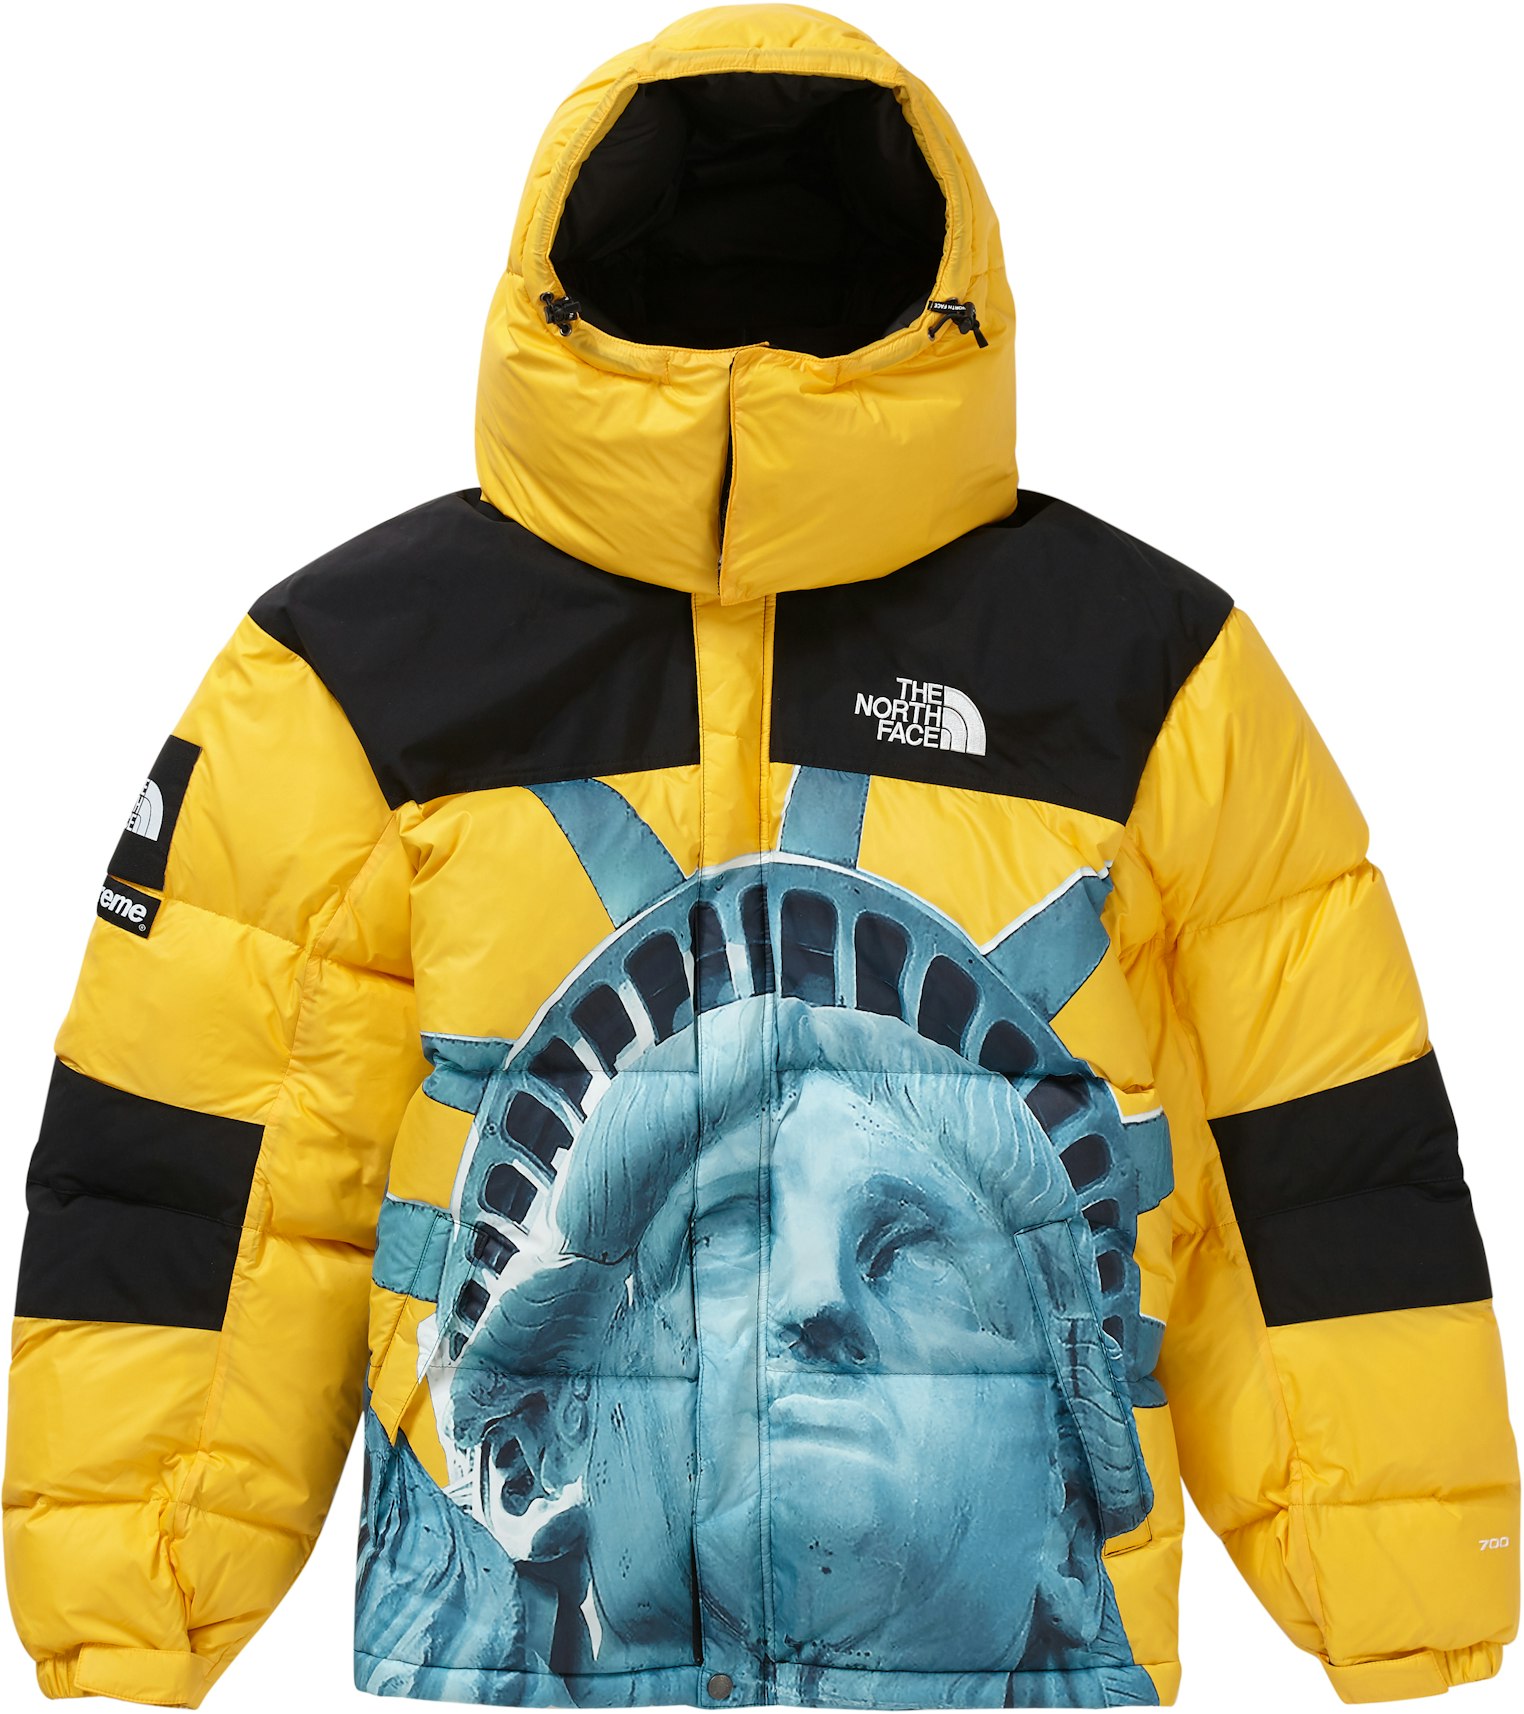 beneden kleding stof Numeriek Supreme The North Face Statue of Liberty Baltoro Jacket Yellow - FW19 Men's  - US